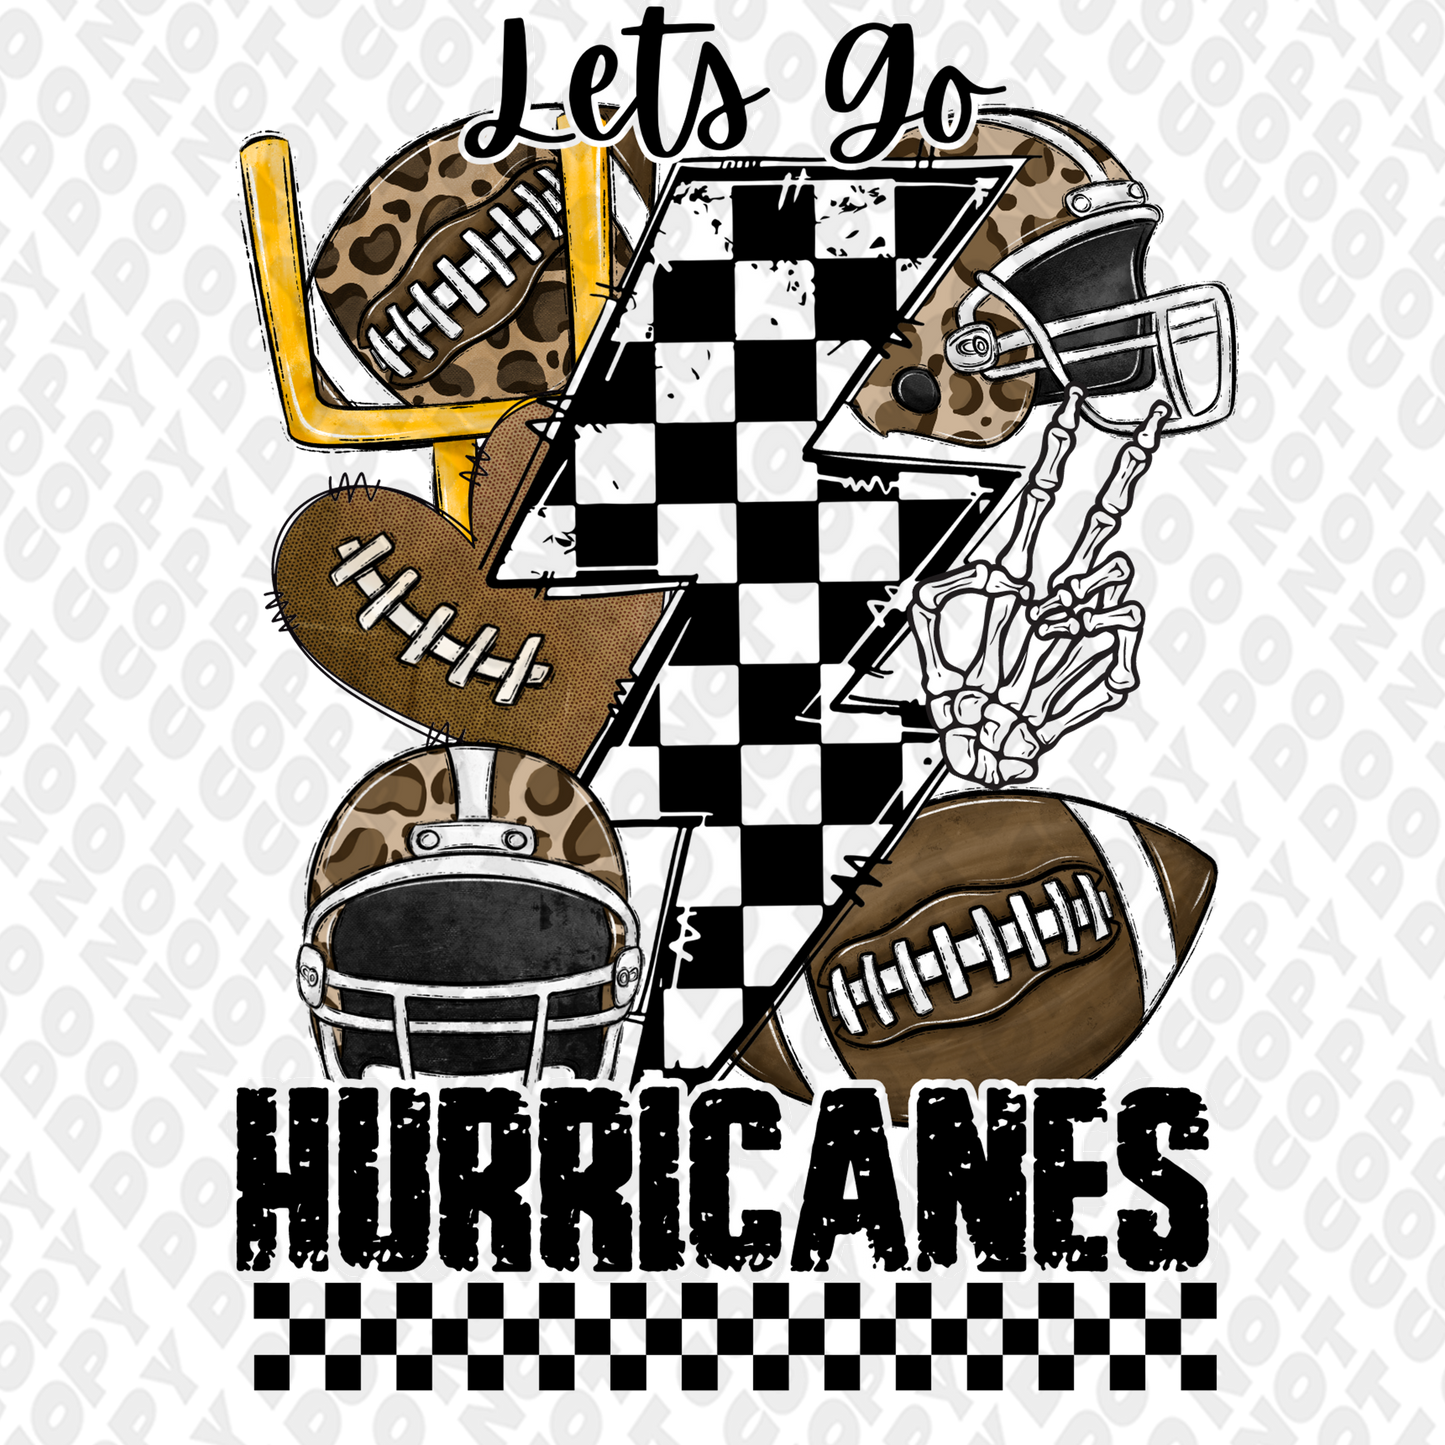 Let's go Hurricanes